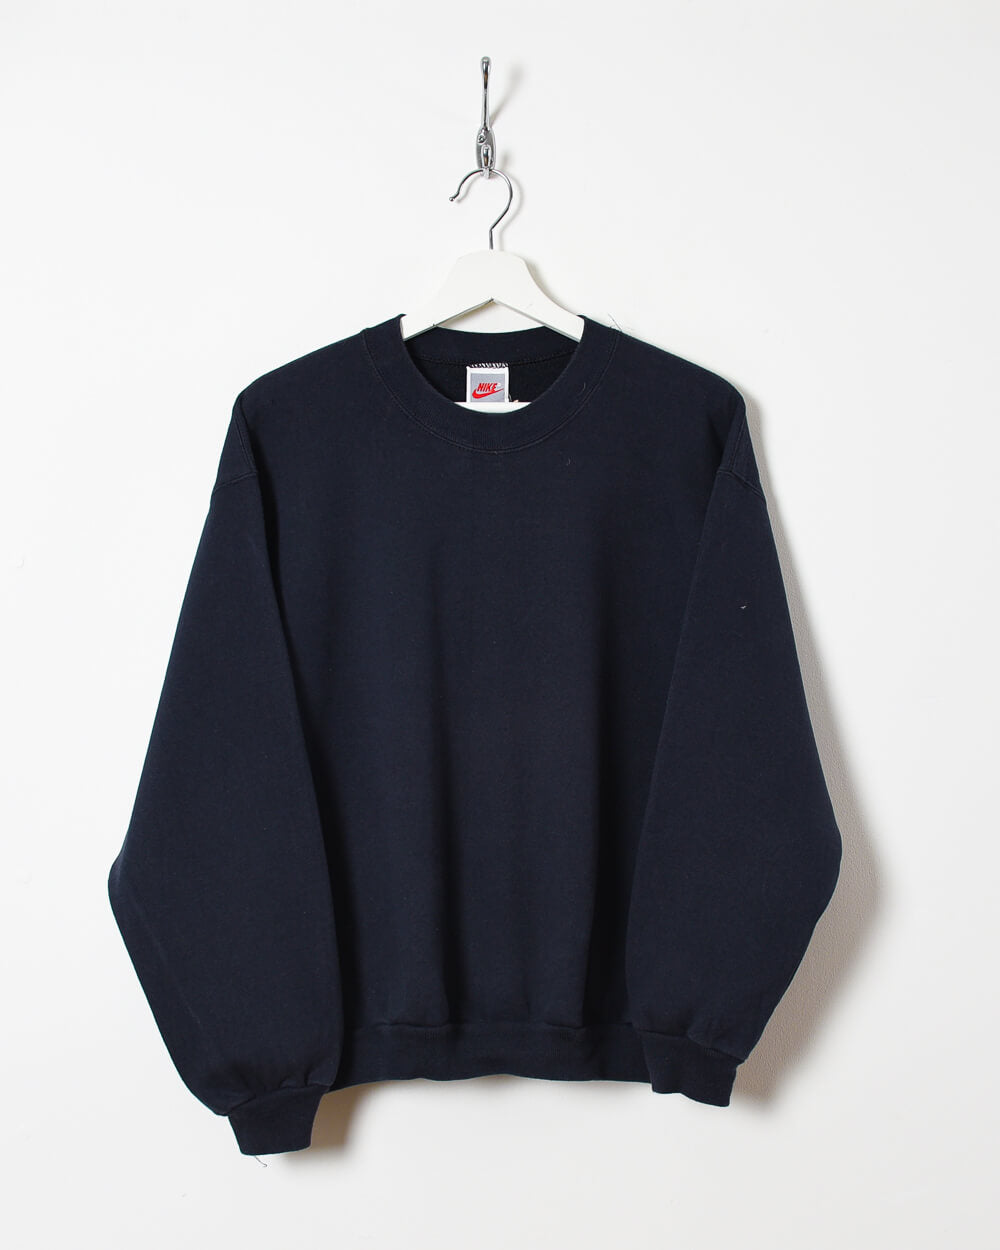 Navy Nike Plain Sweatshirt - Small